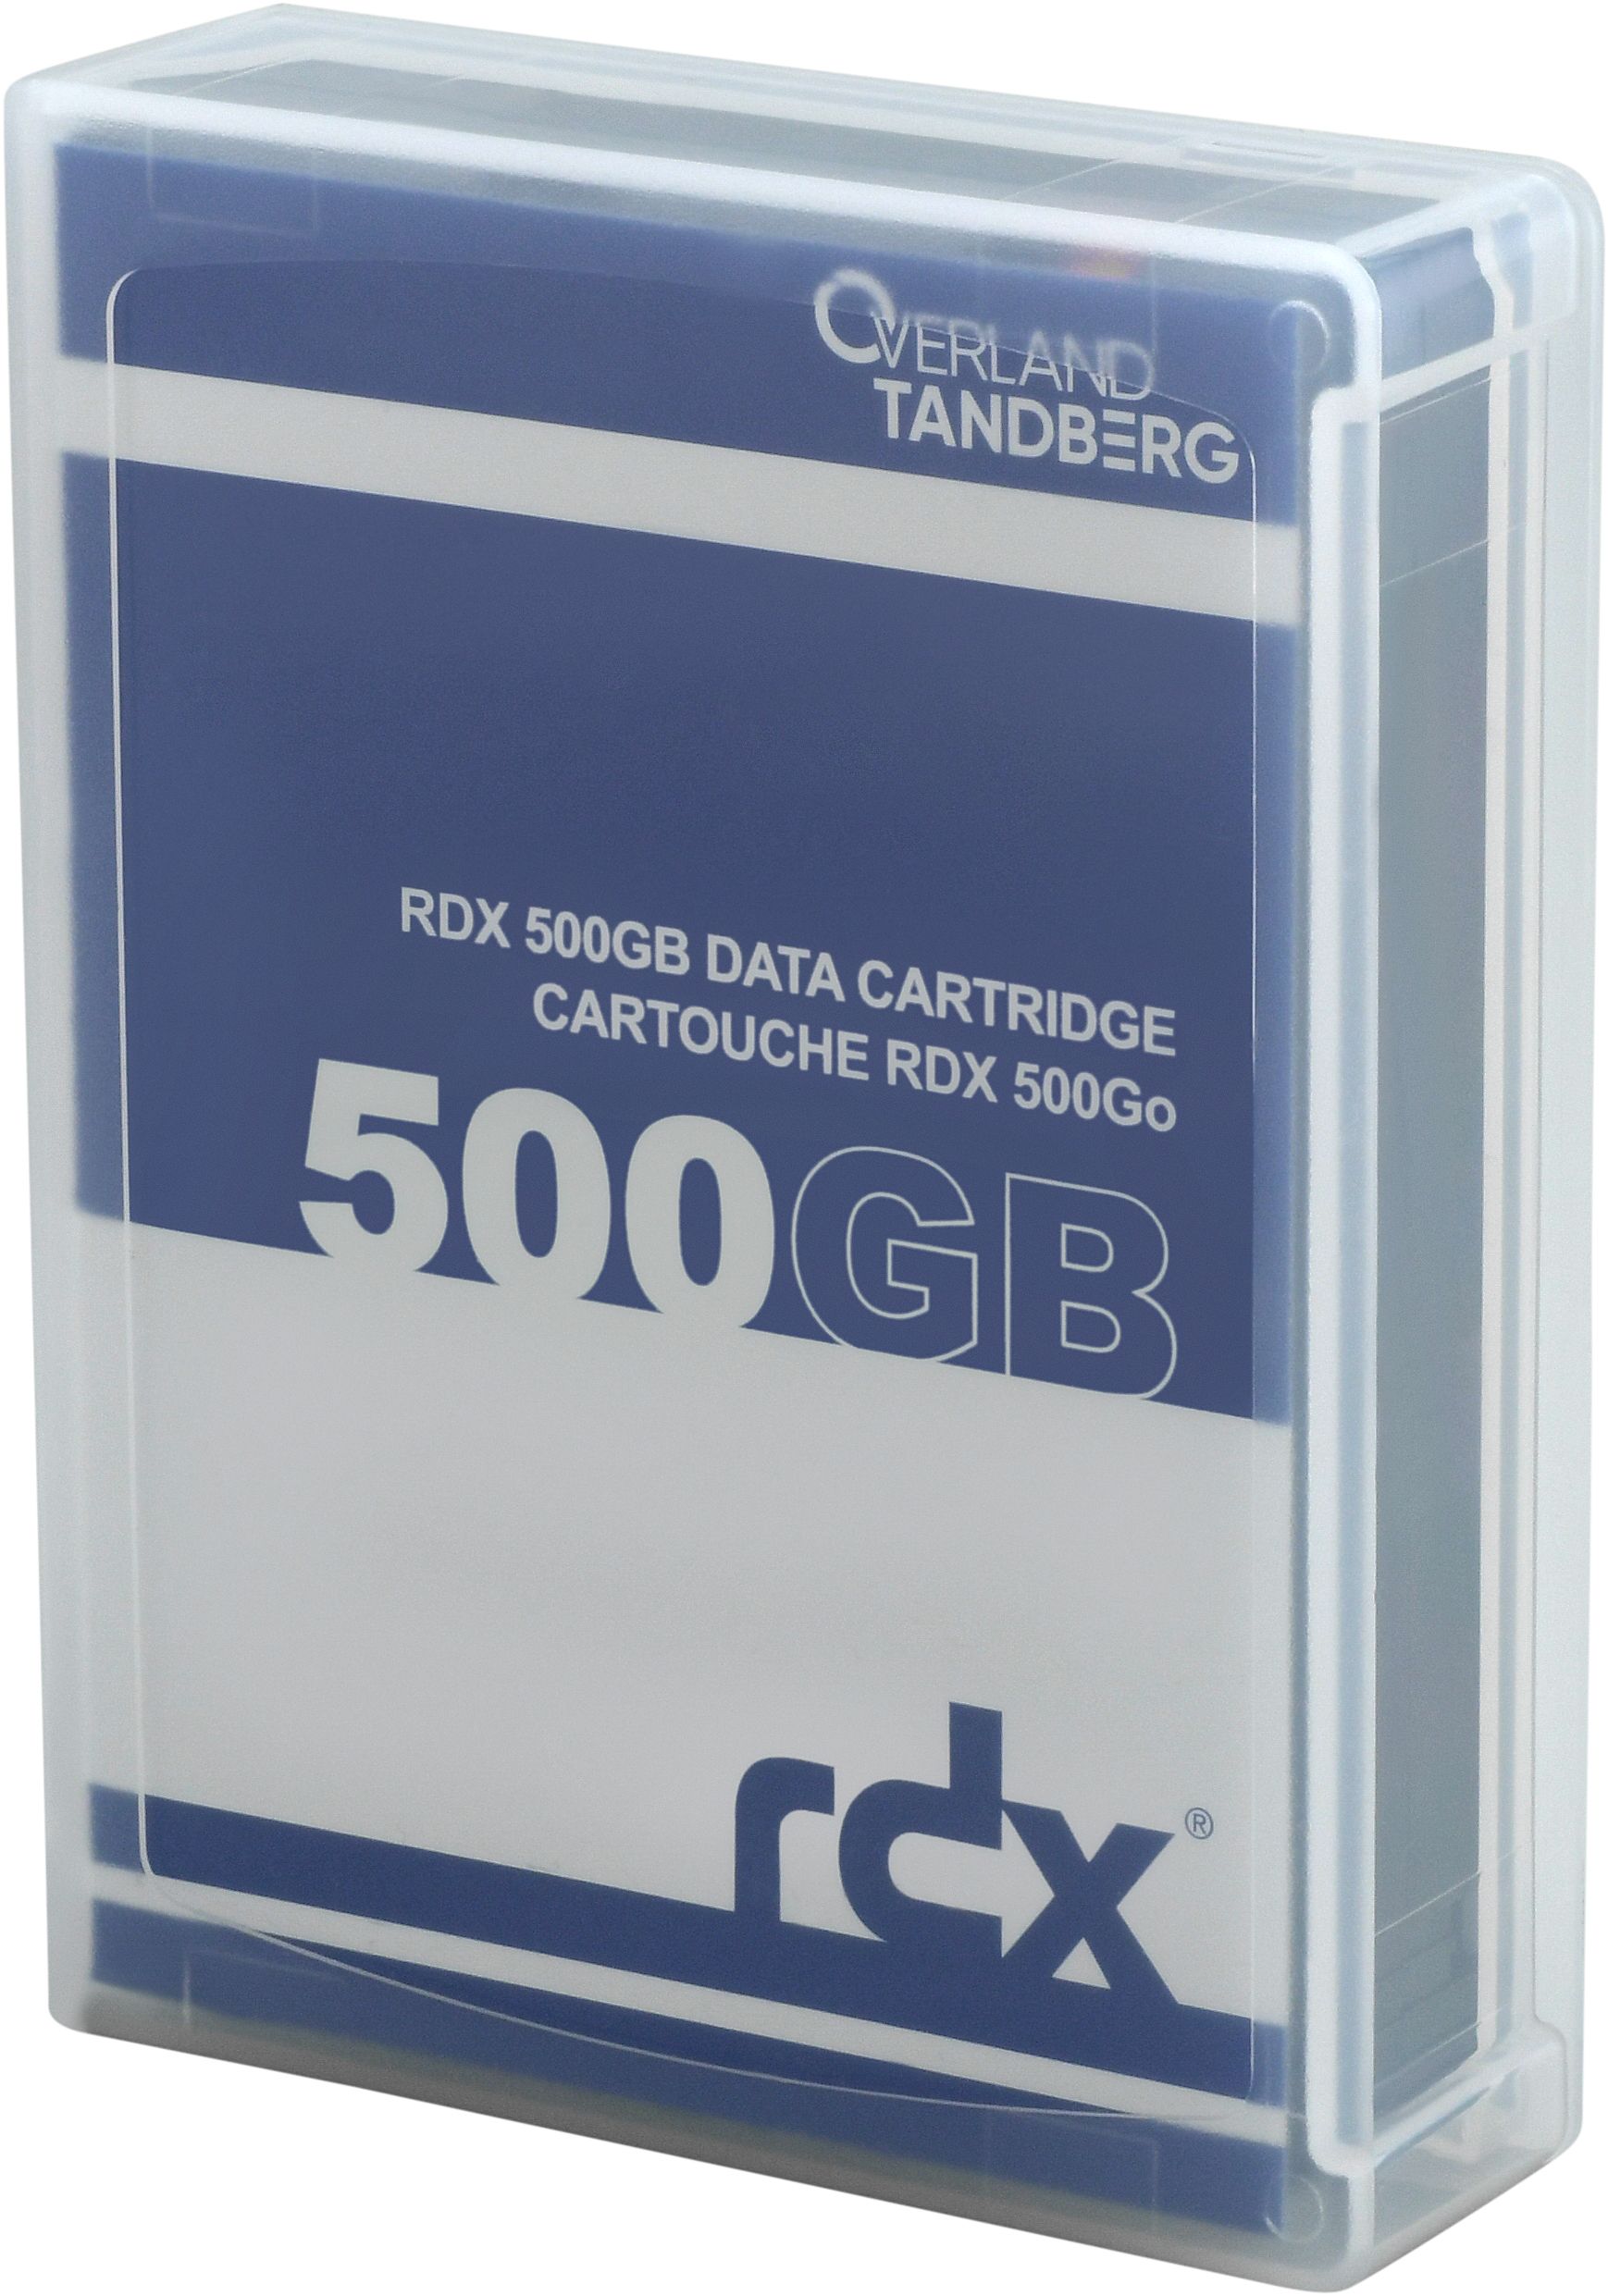 Cartridge Tandberg RDX 500GB_2